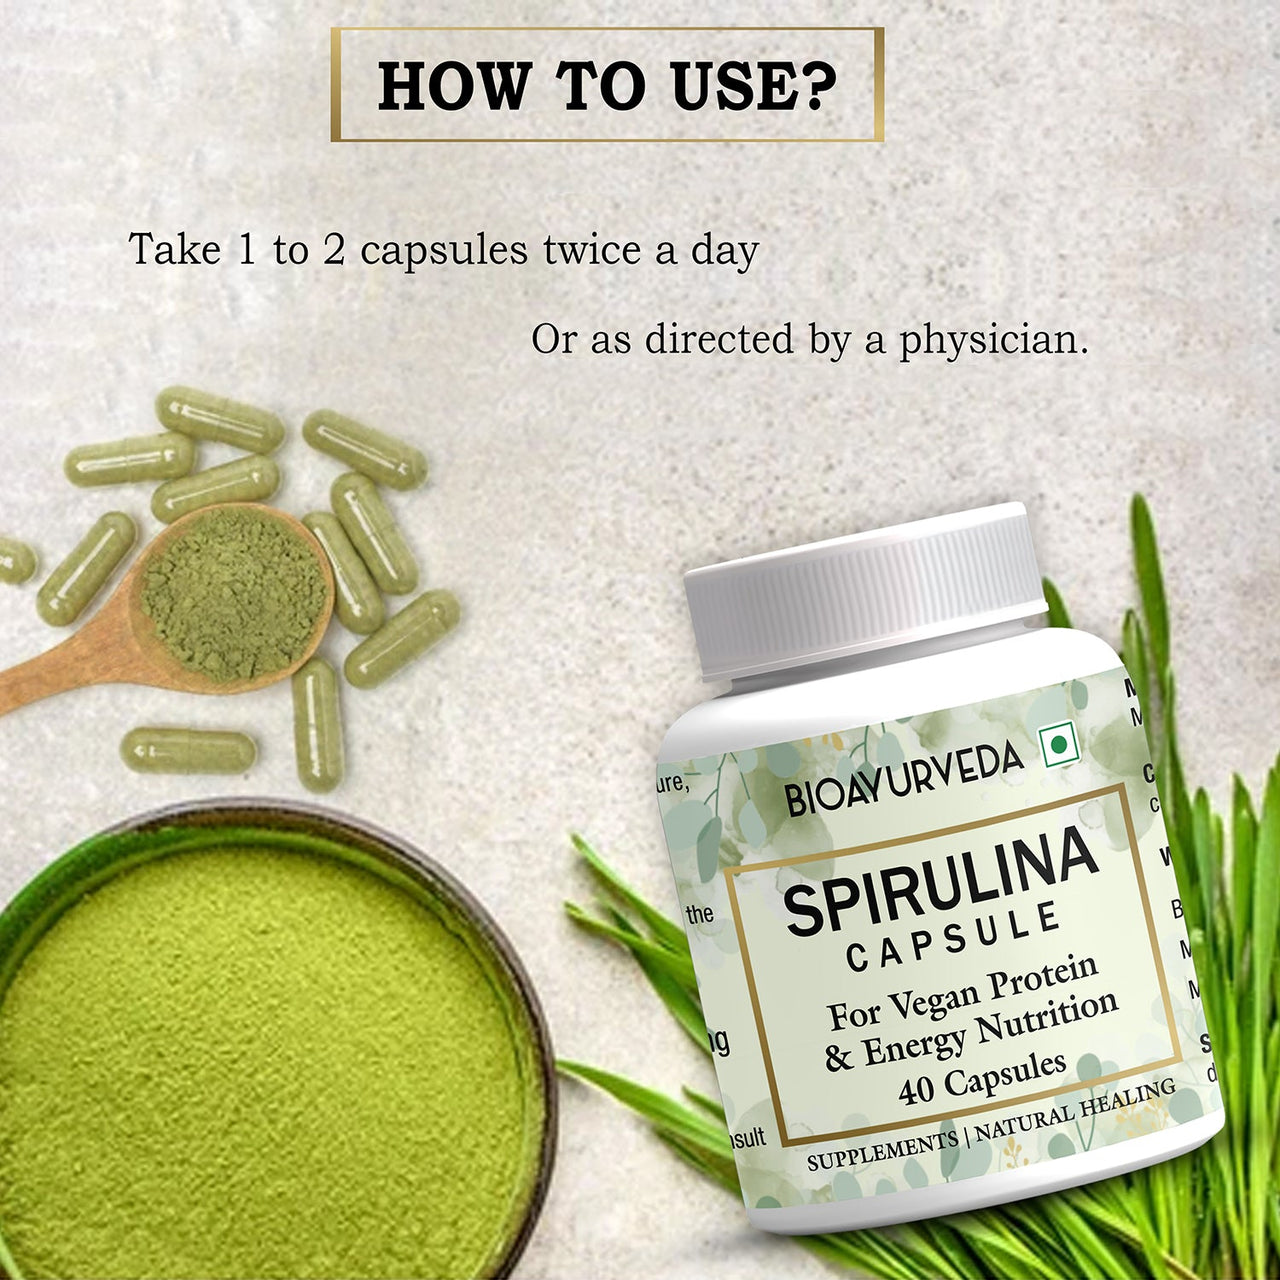 How TO Use Spirulina Capsule